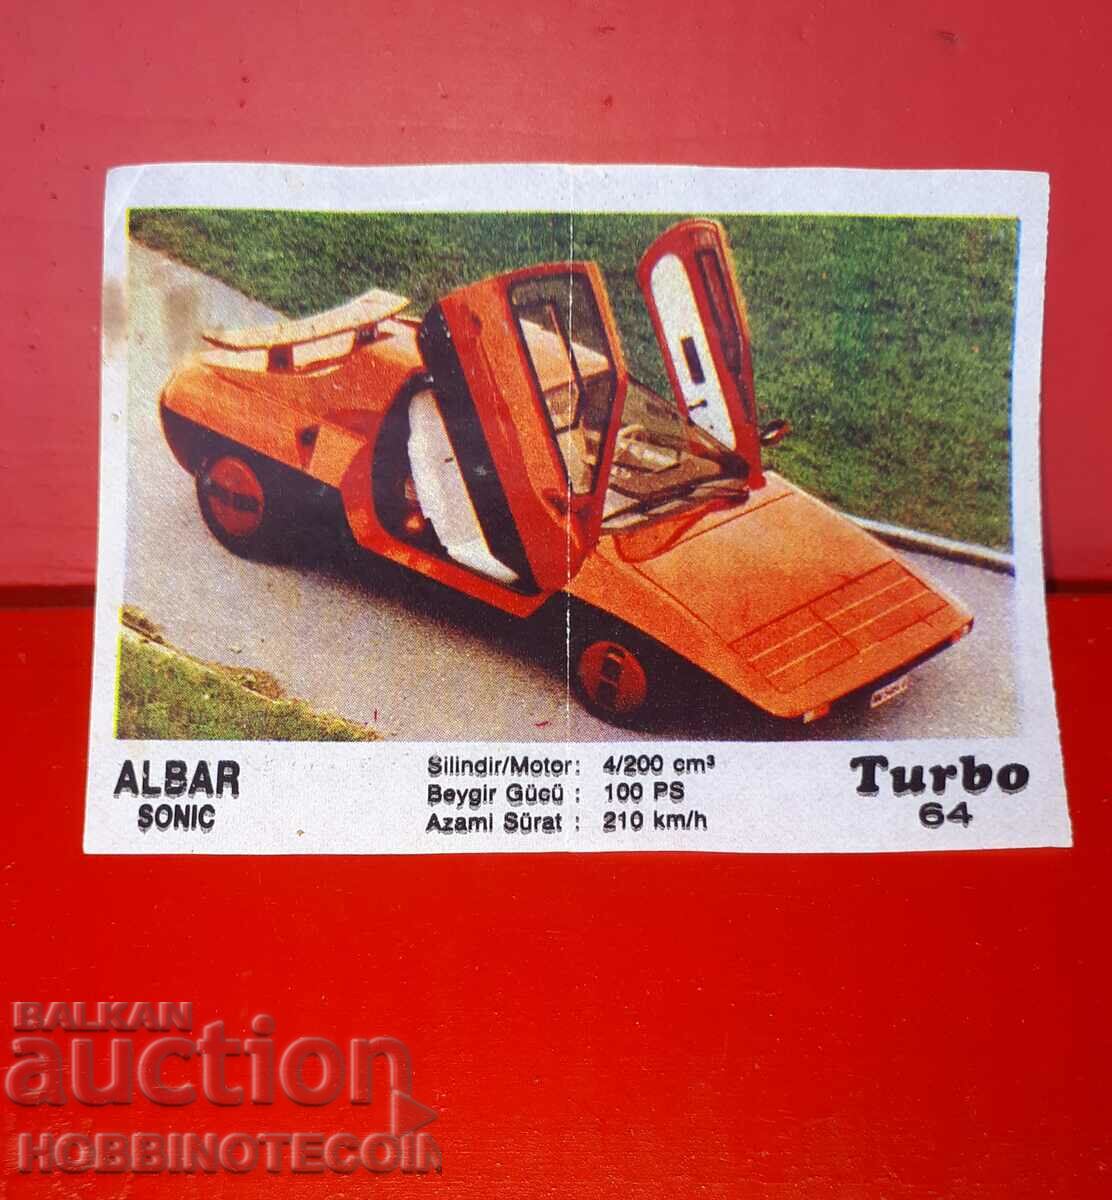 PICTURE TURBO TURBO N 64 ALBAR SONIC